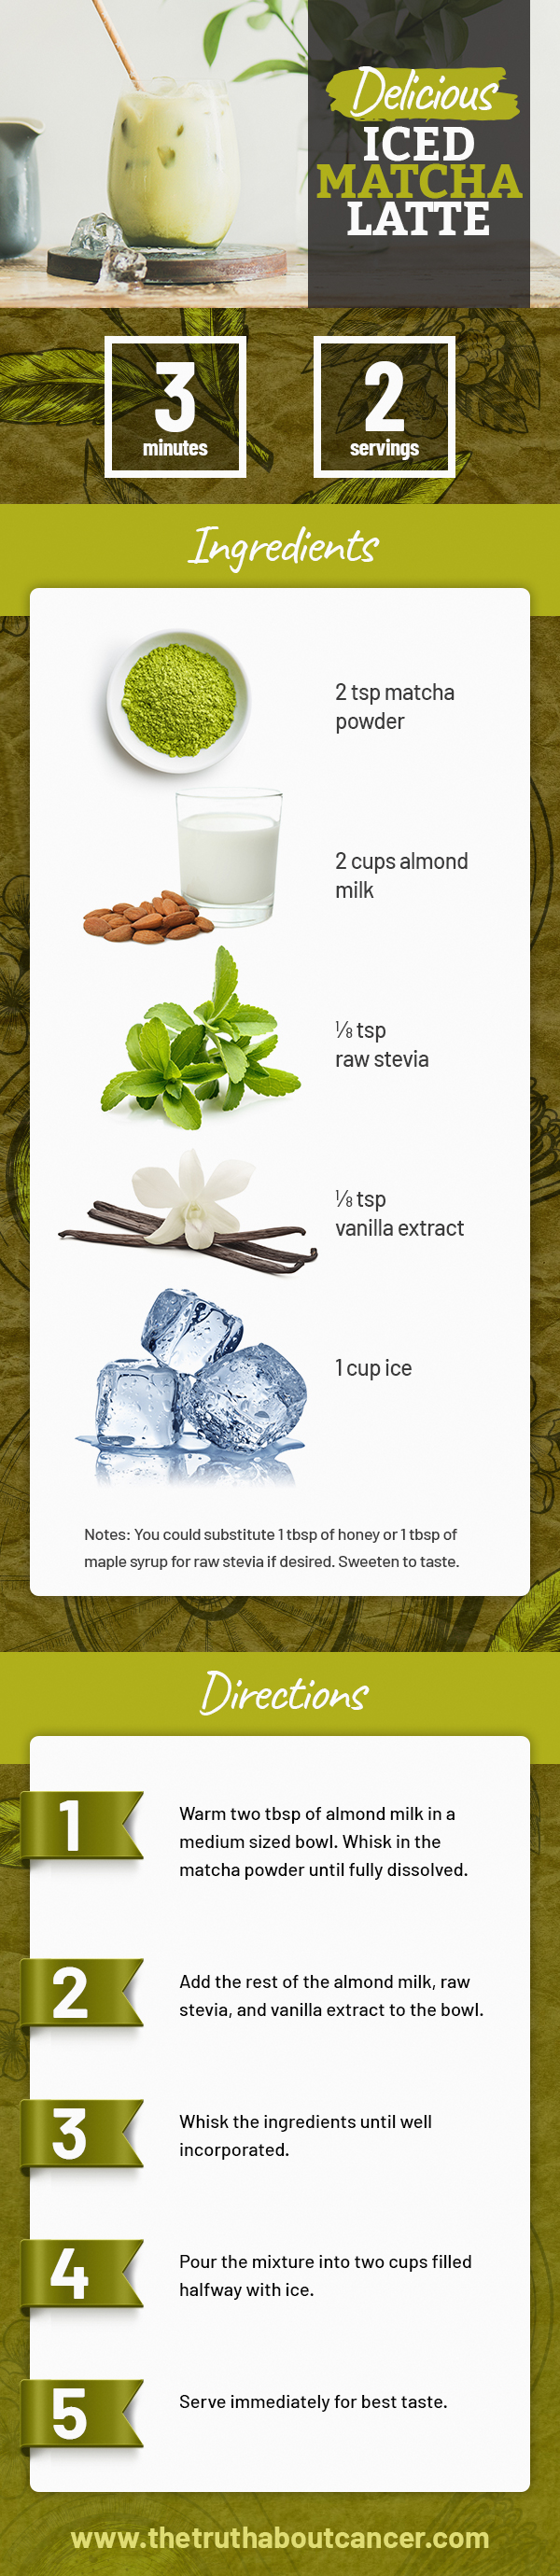 iced matcha green tea recipe